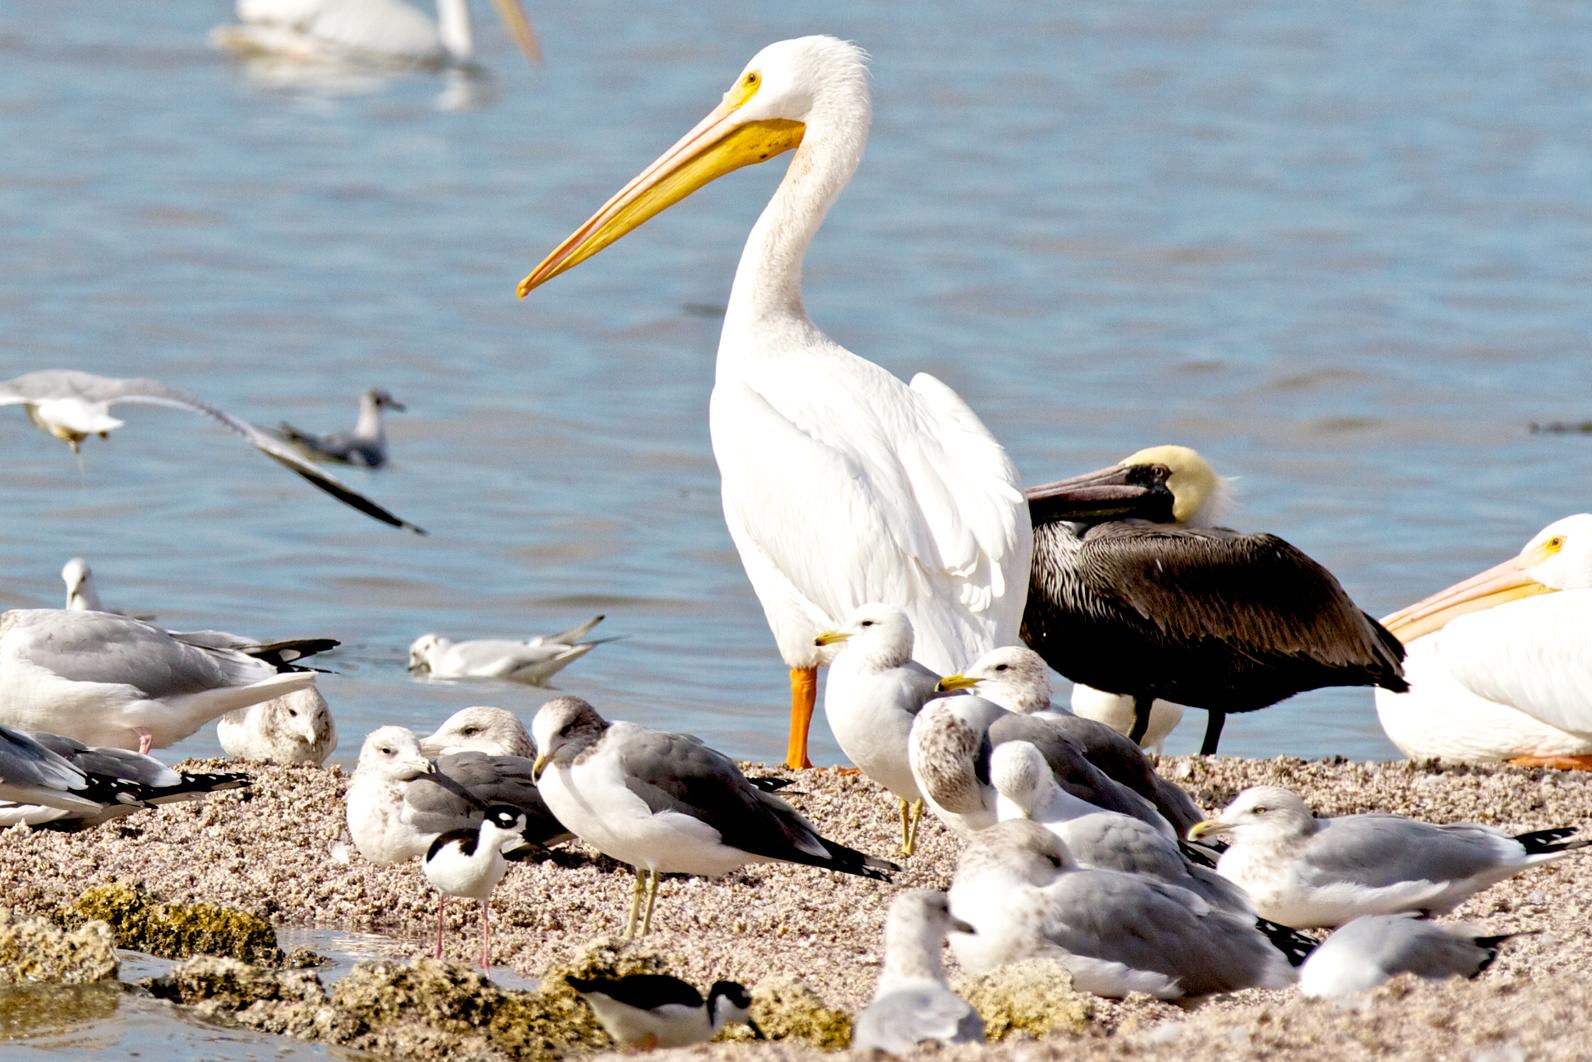 Salton Sea hosts a diversity of birds